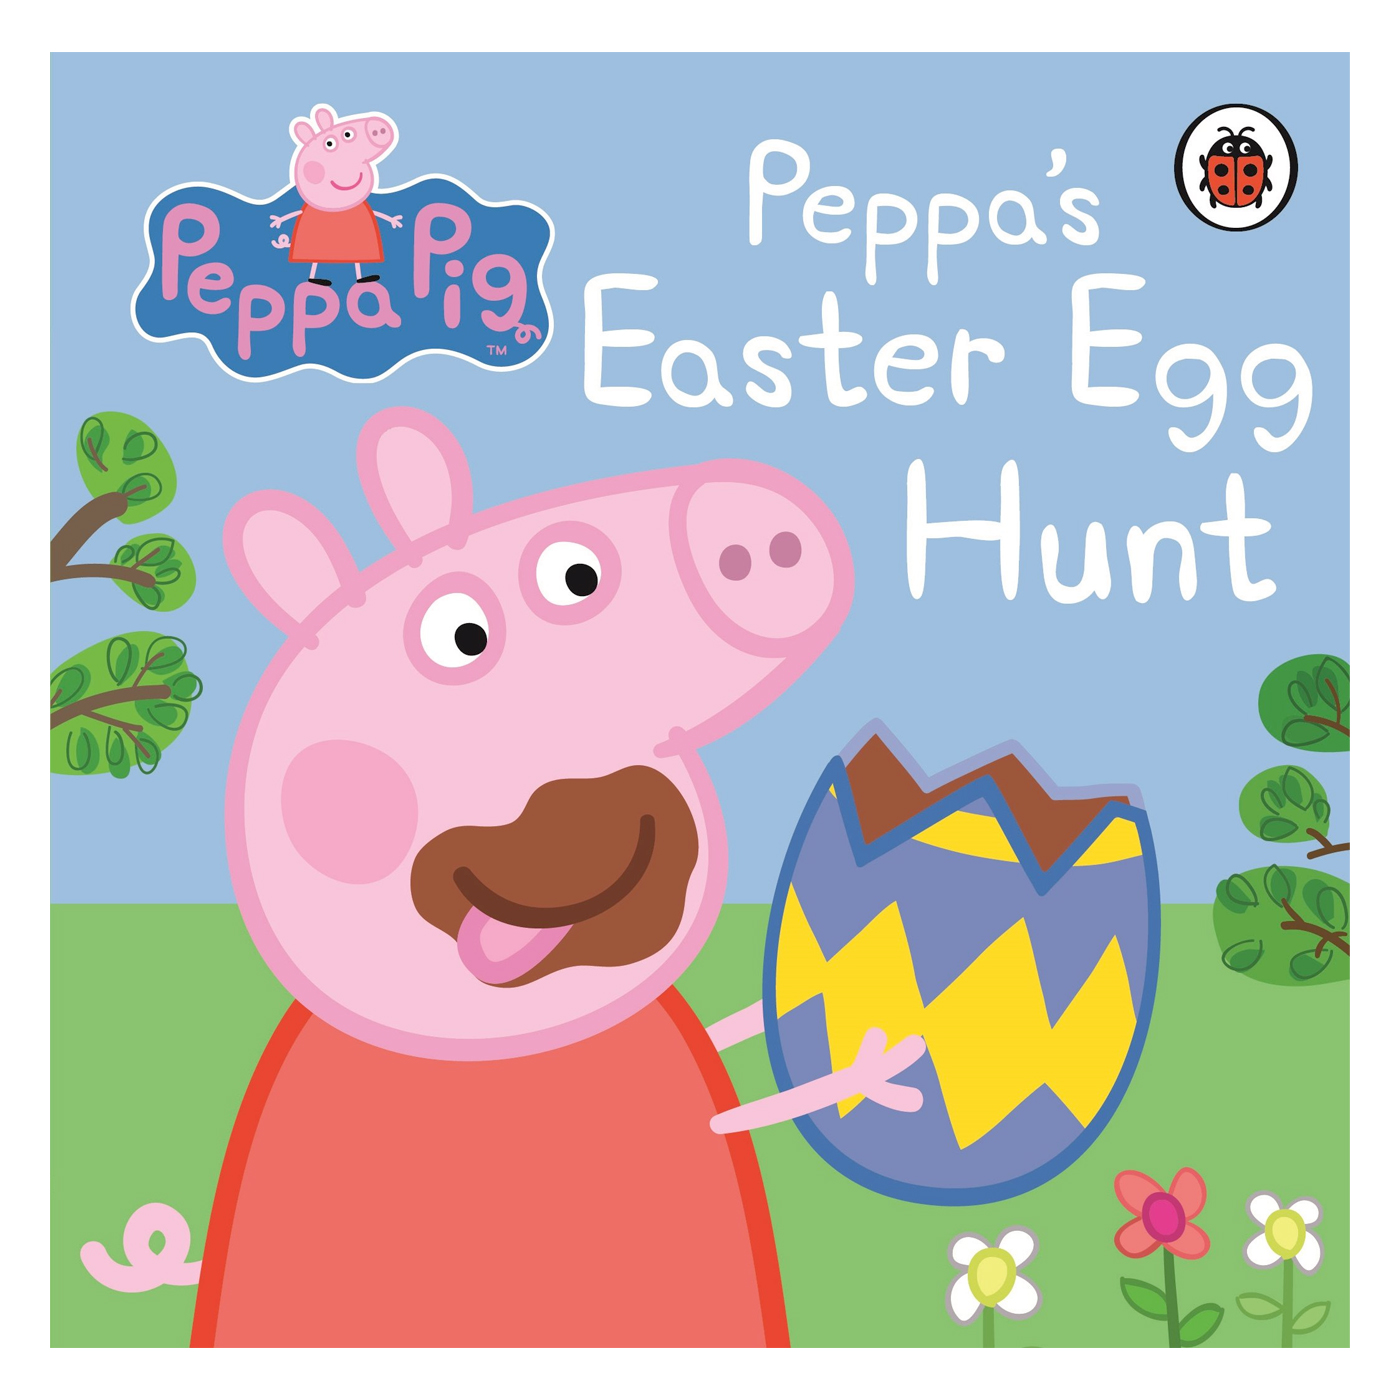 LADYBIRD Peppa Pig: Peppa's Easter Egg Hunt